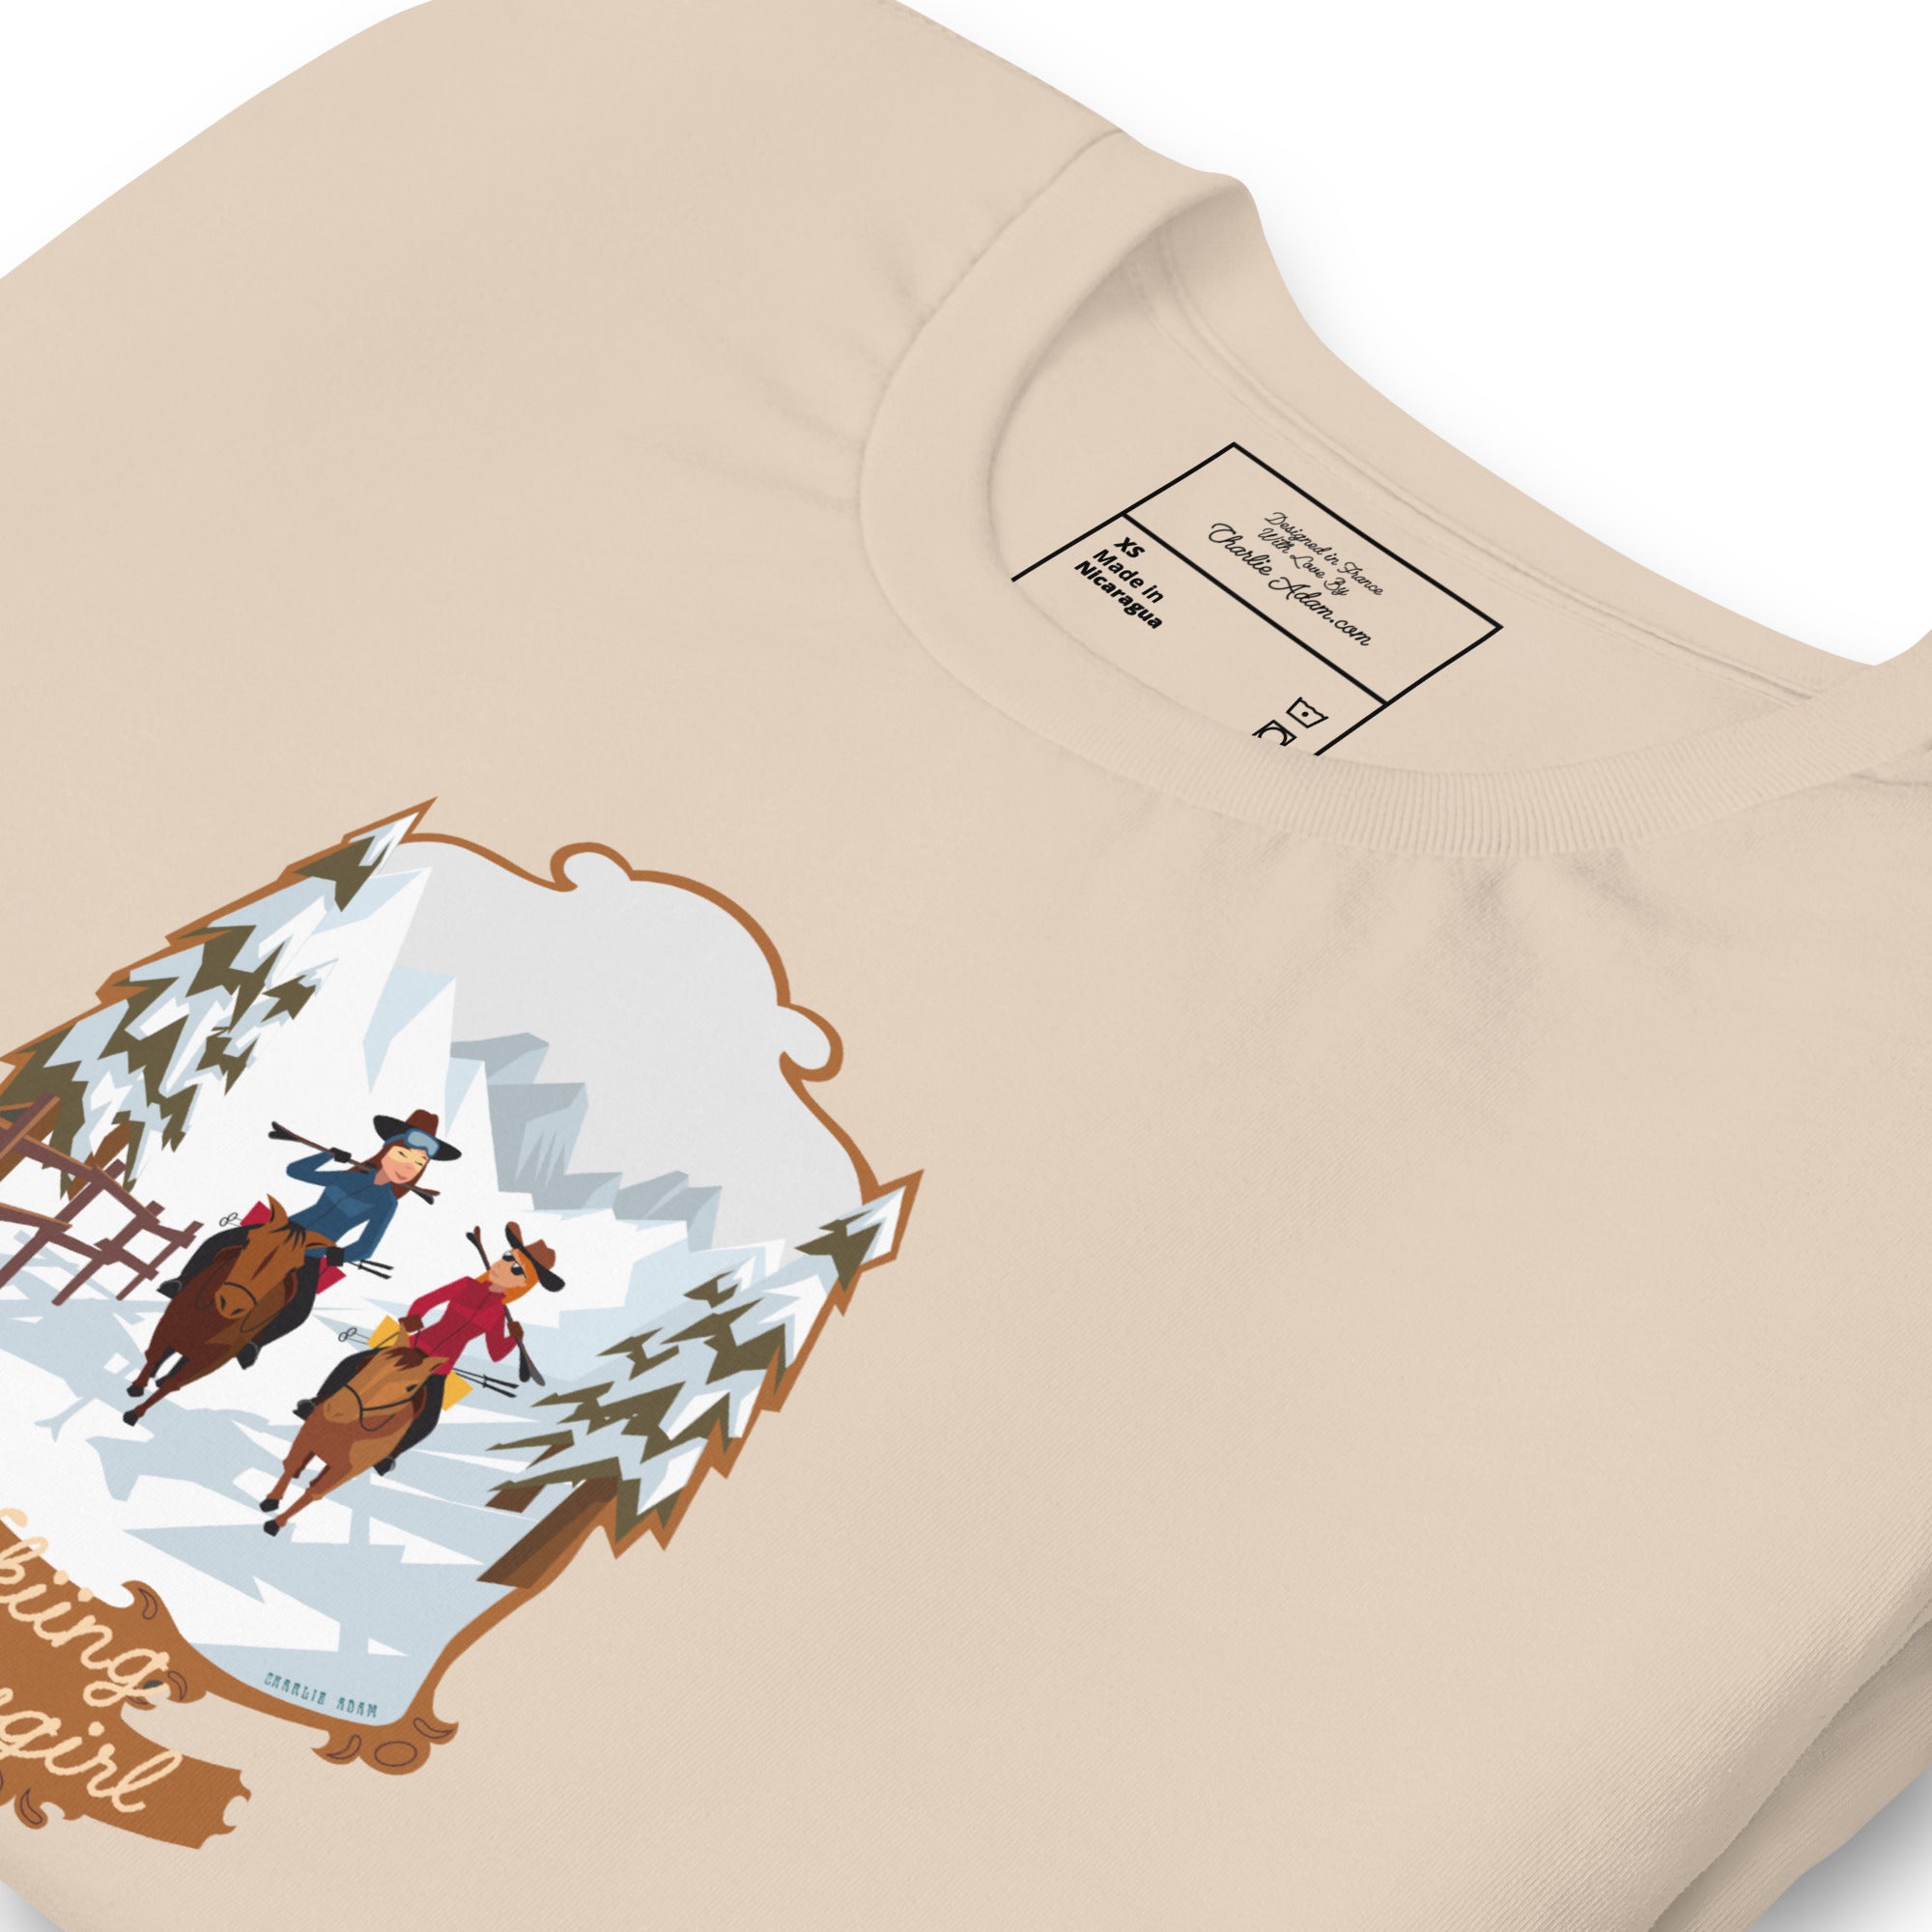 T-shirt en coton unisexe The Skiing Cowgirl sur fond clair